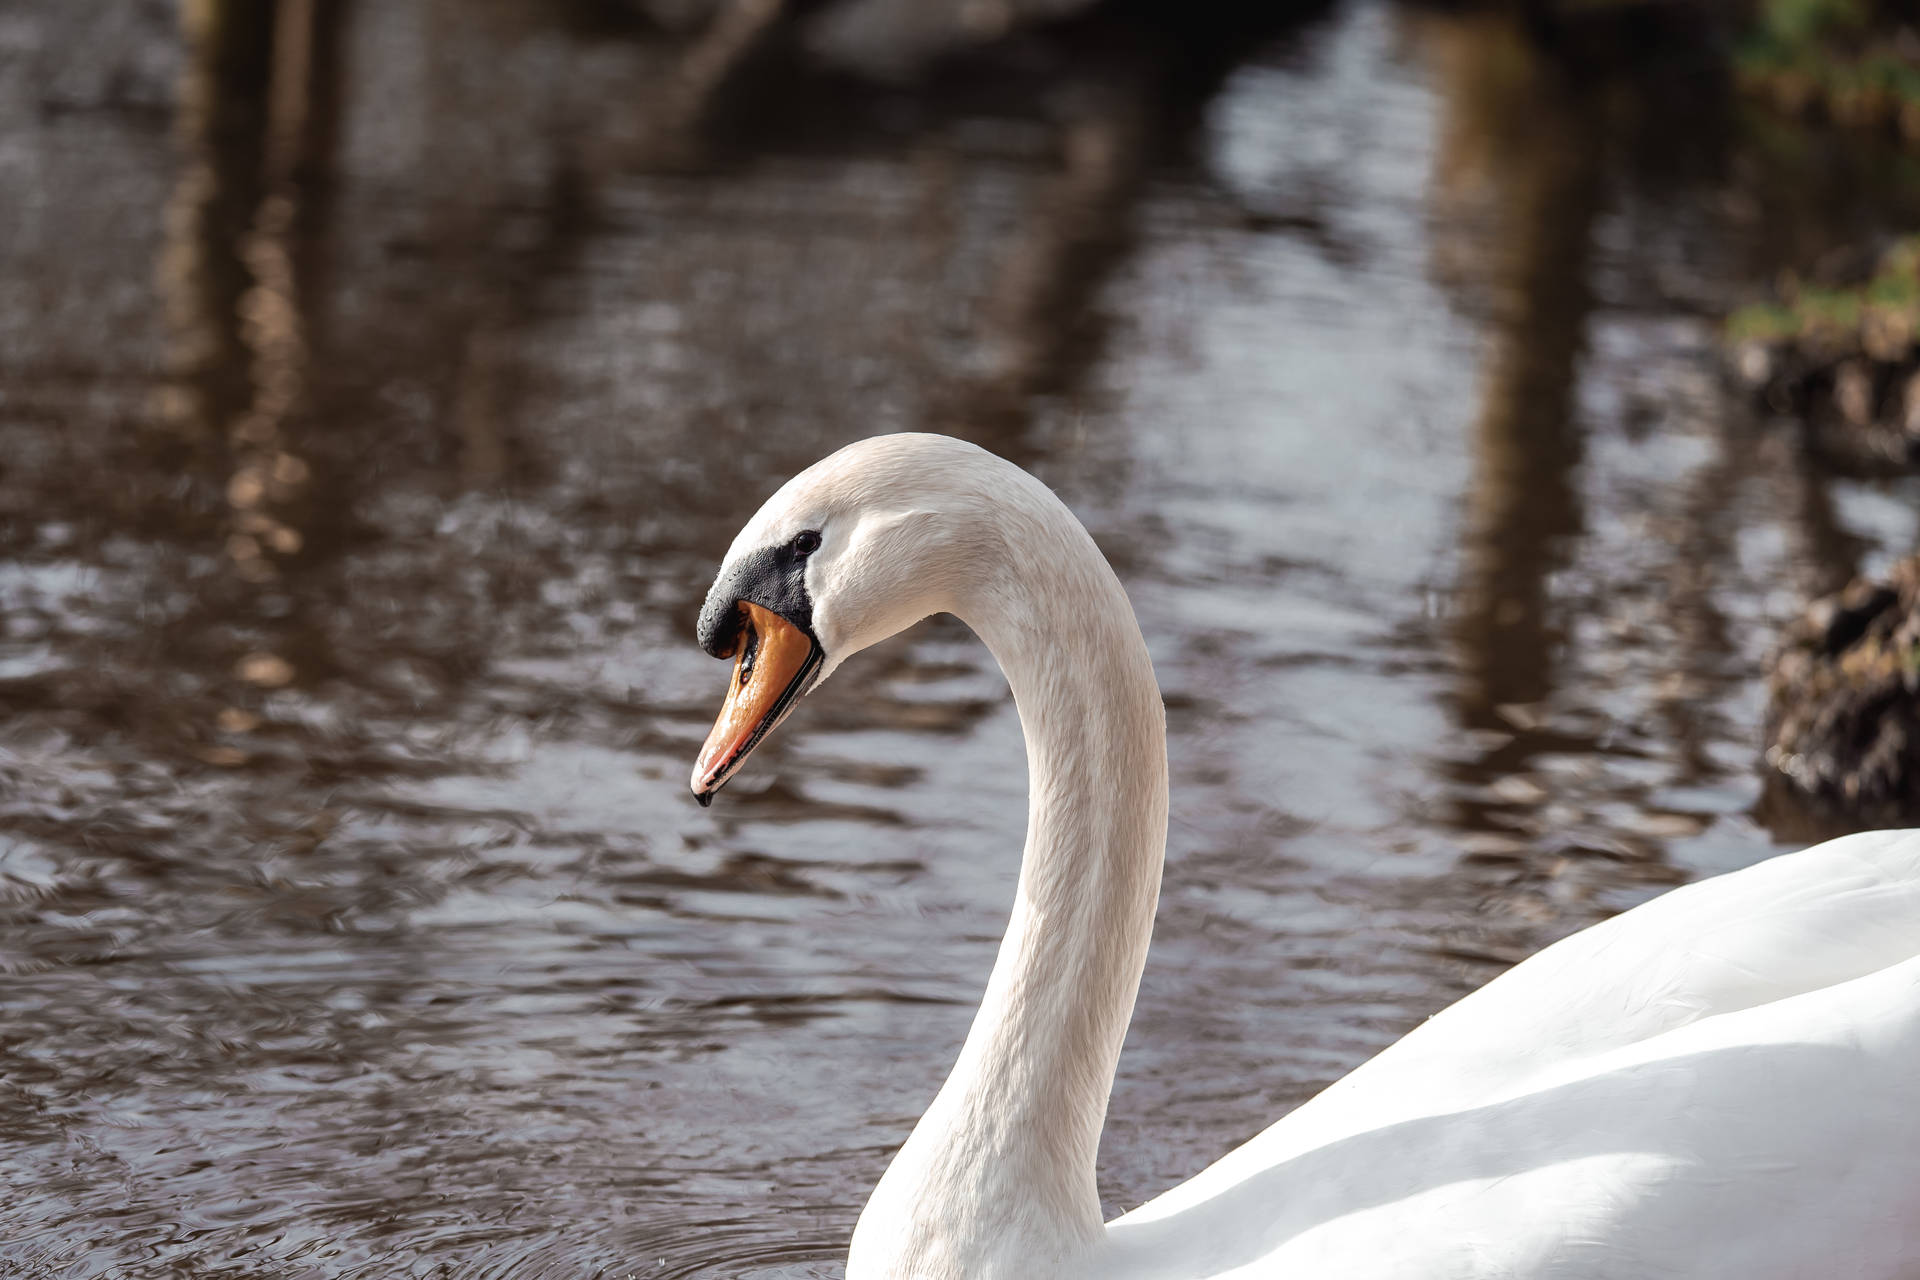 Cute Hd Image Of White Swan